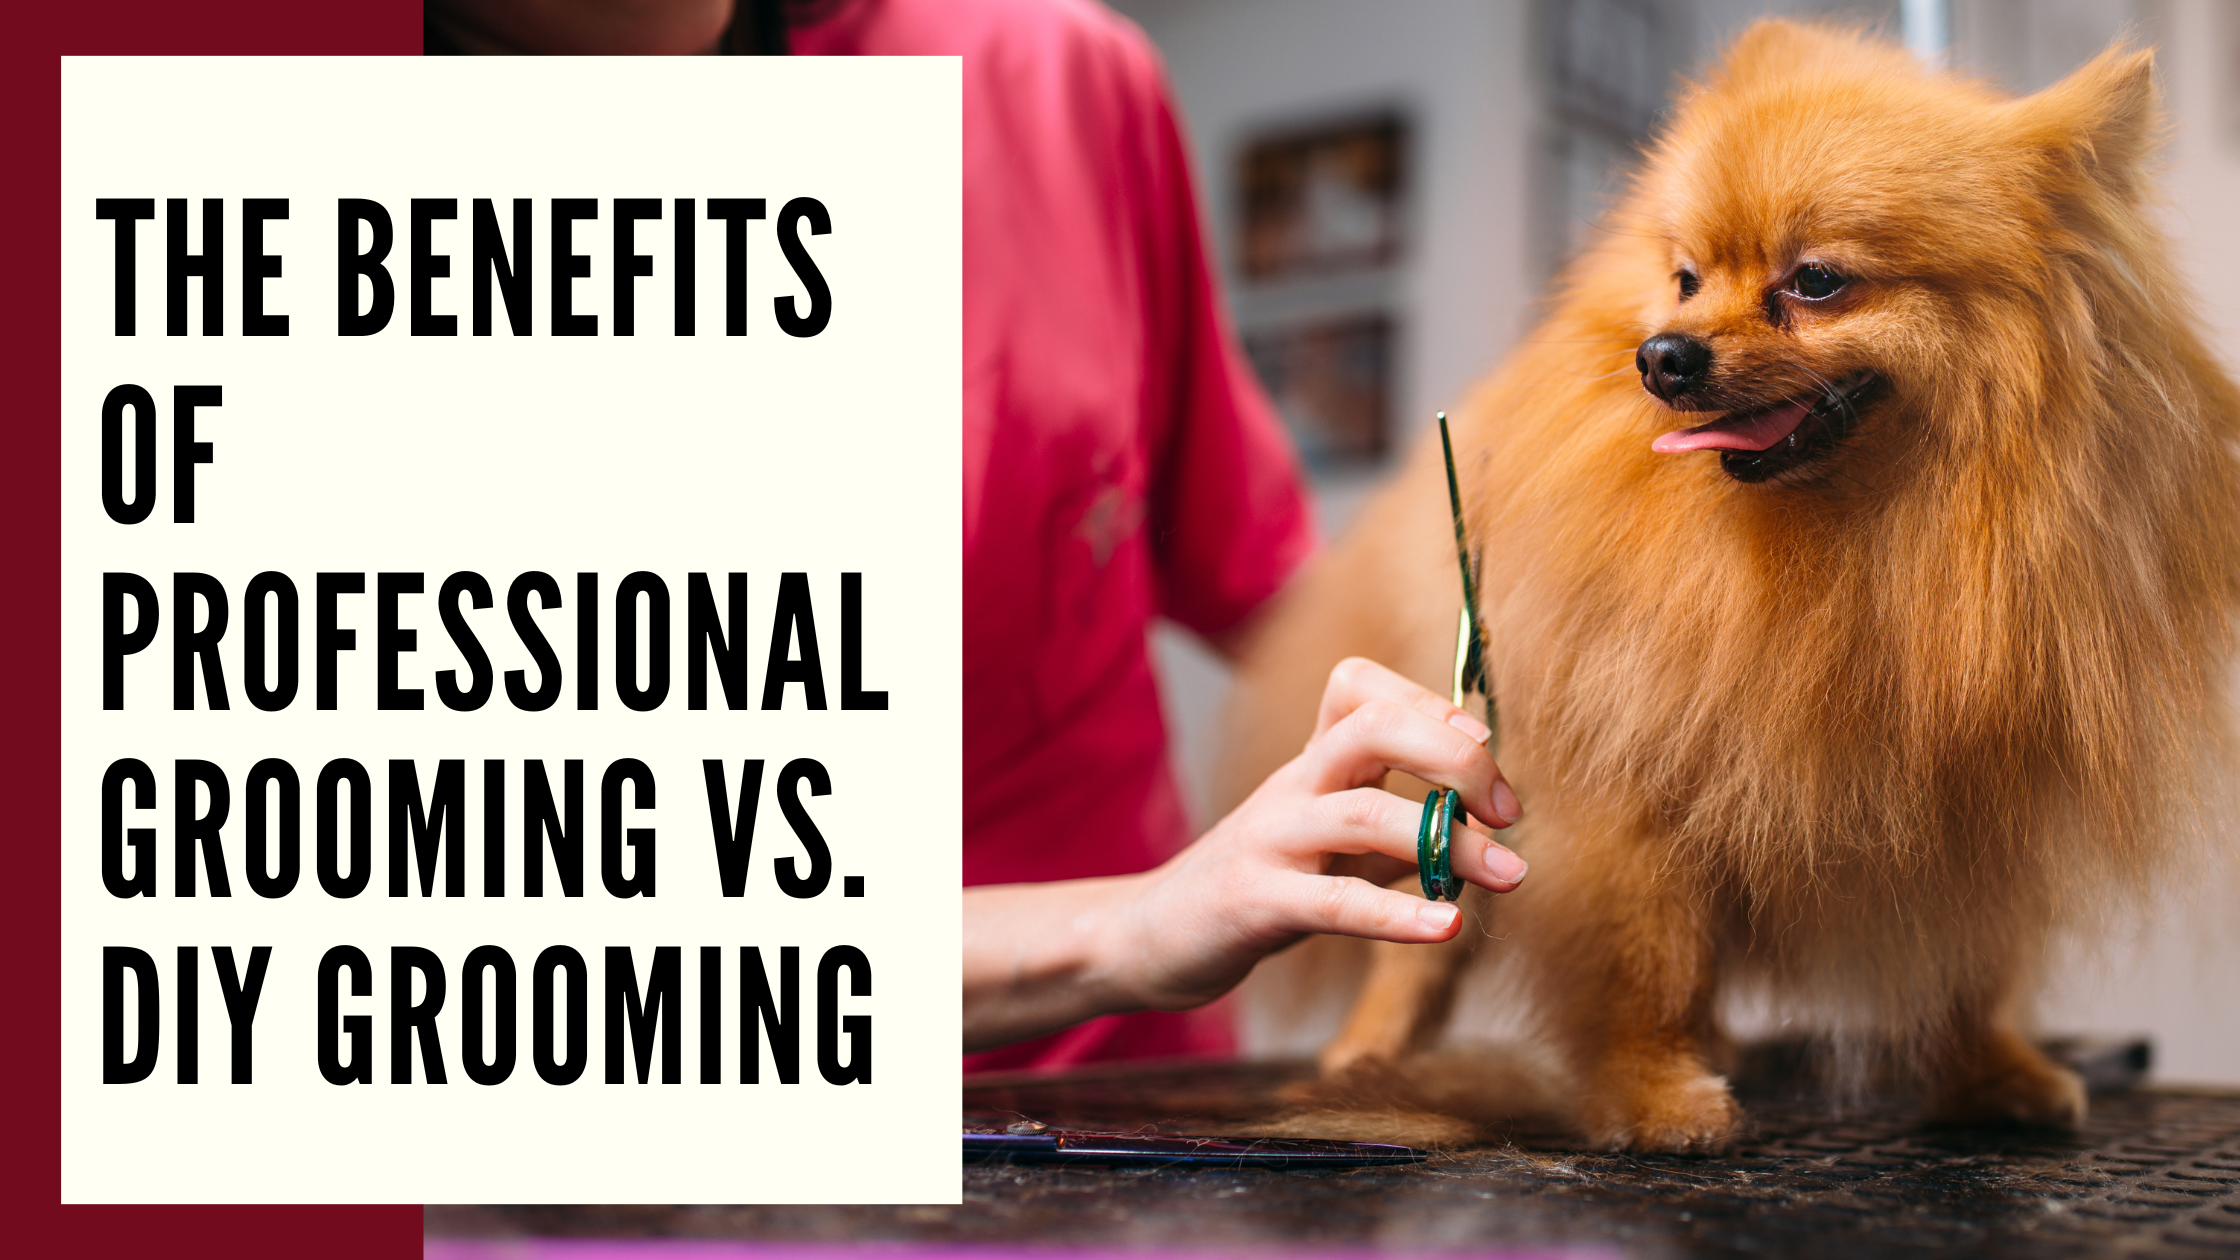 The Benefits of Professional Grooming vs. DIY Grooming